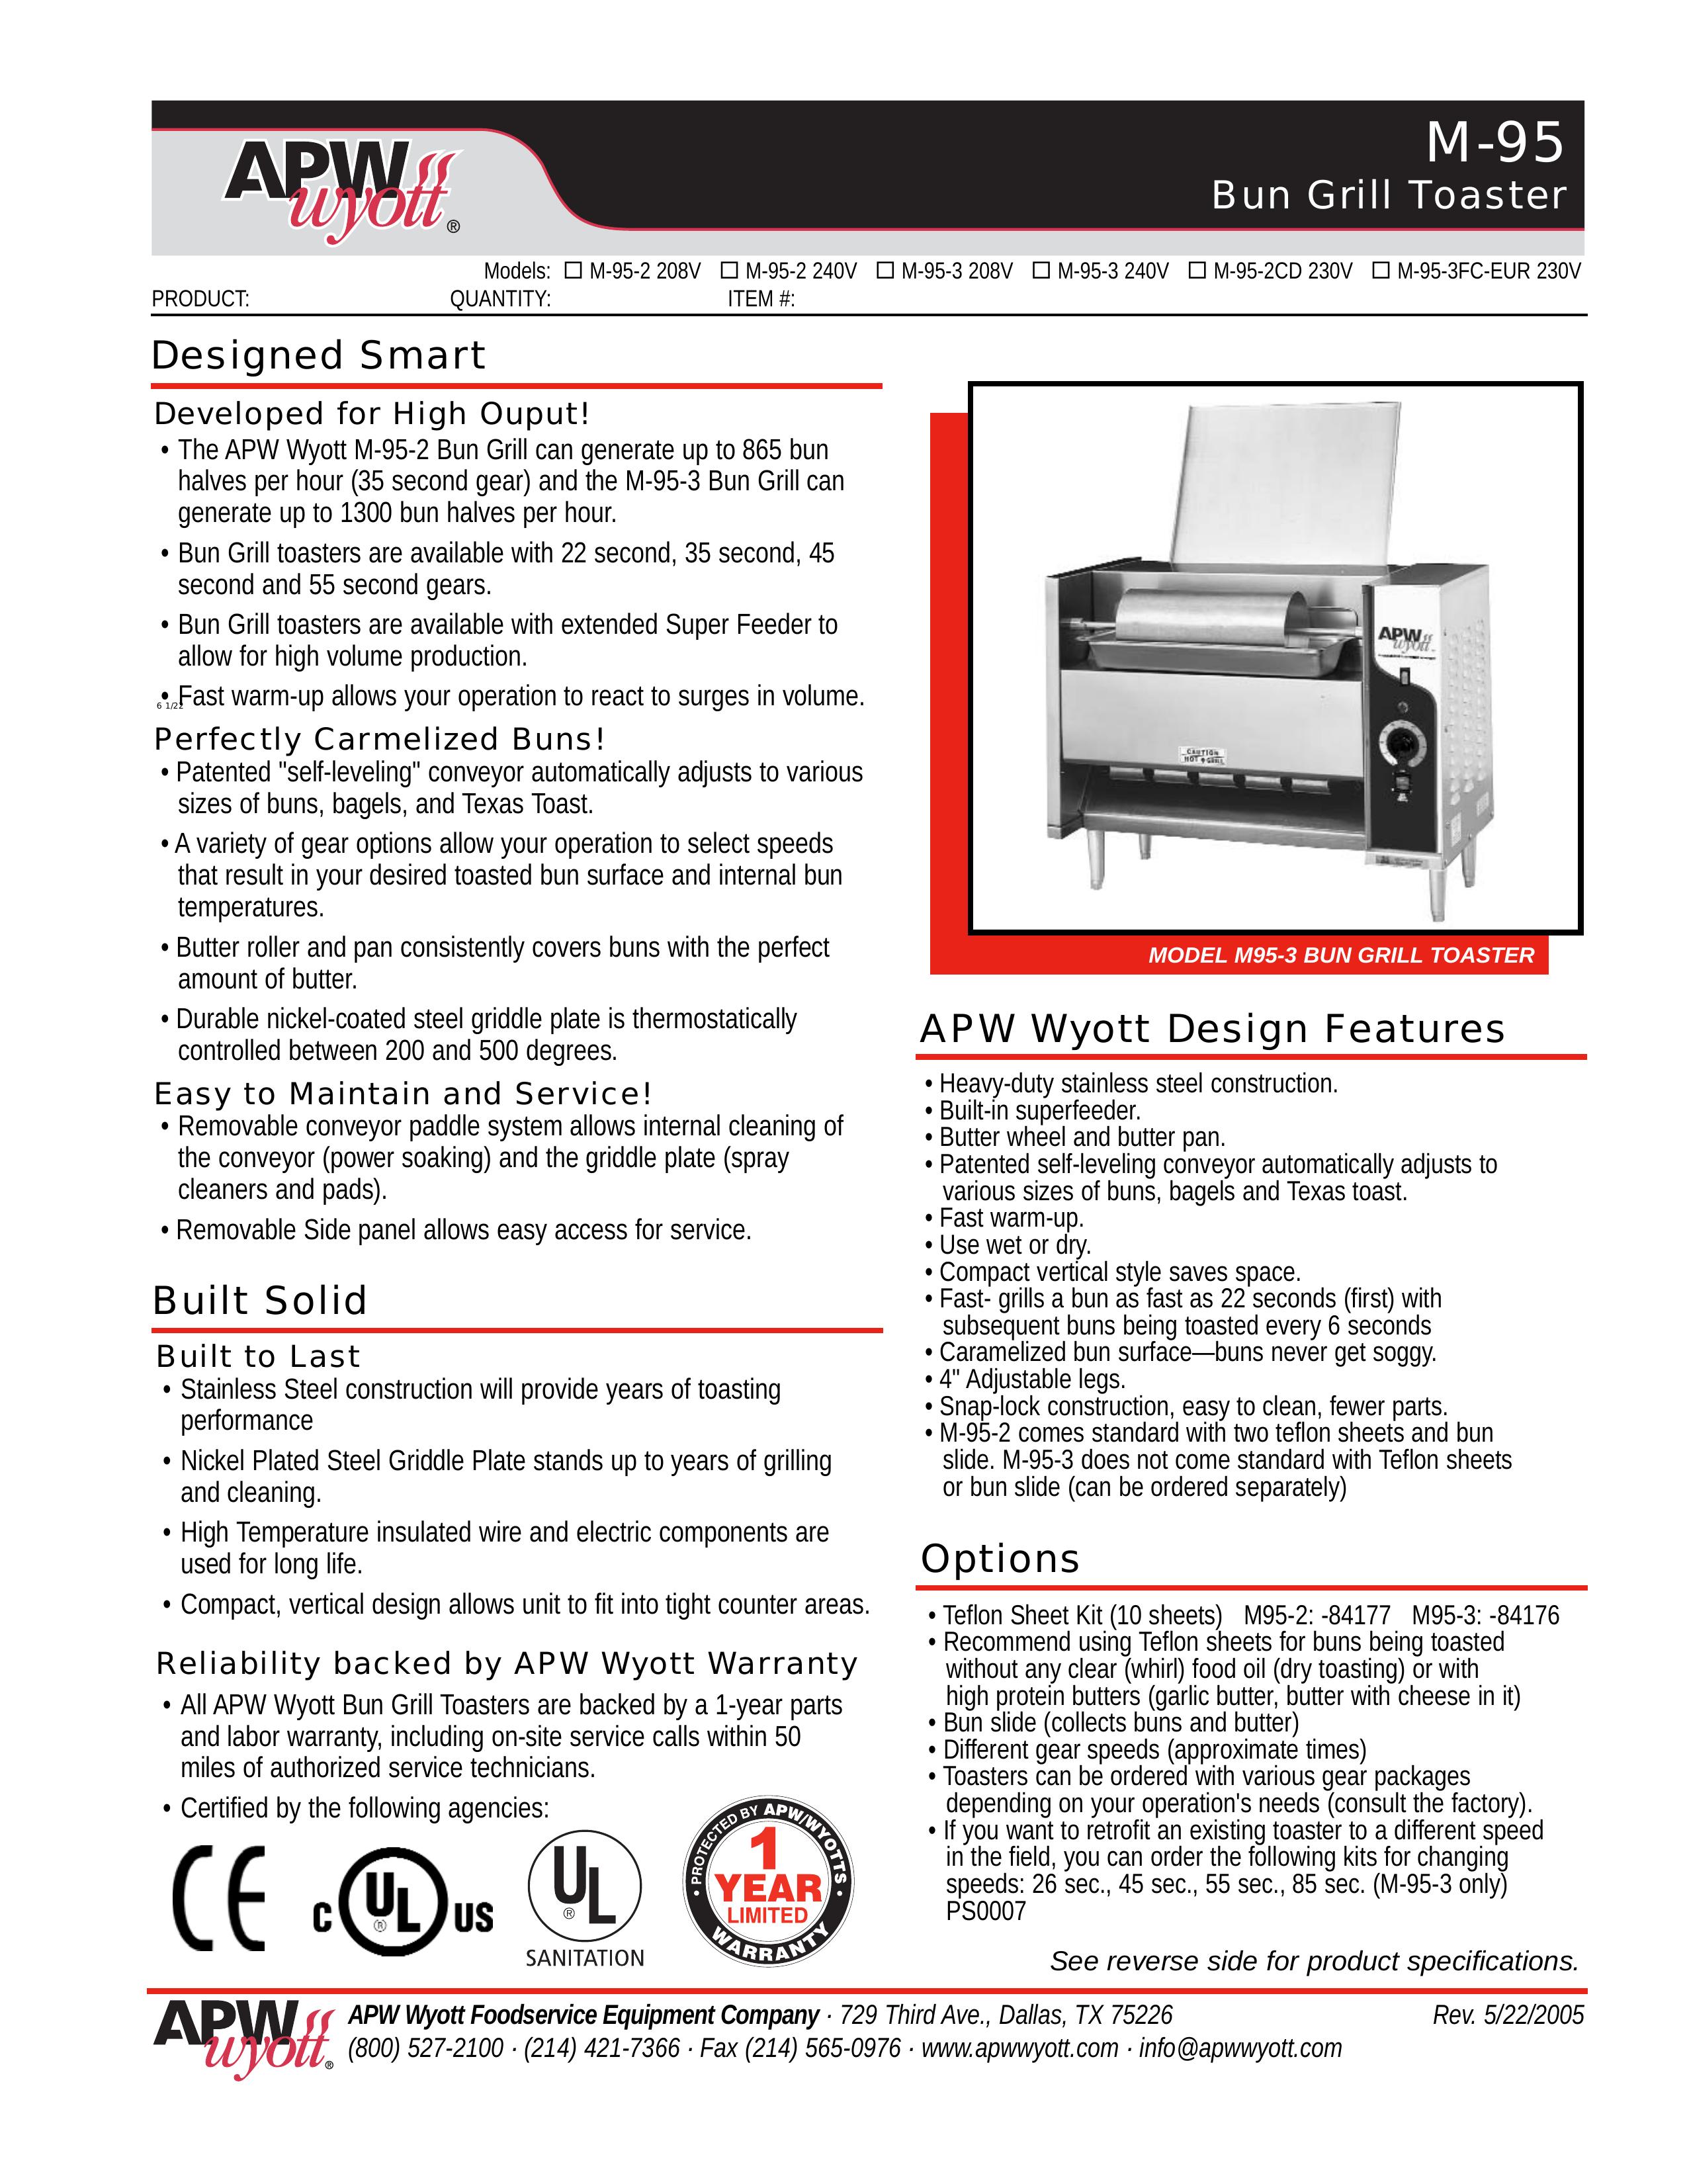 APW Wyott M-95-3FC-EUR 230V Toaster User Manual